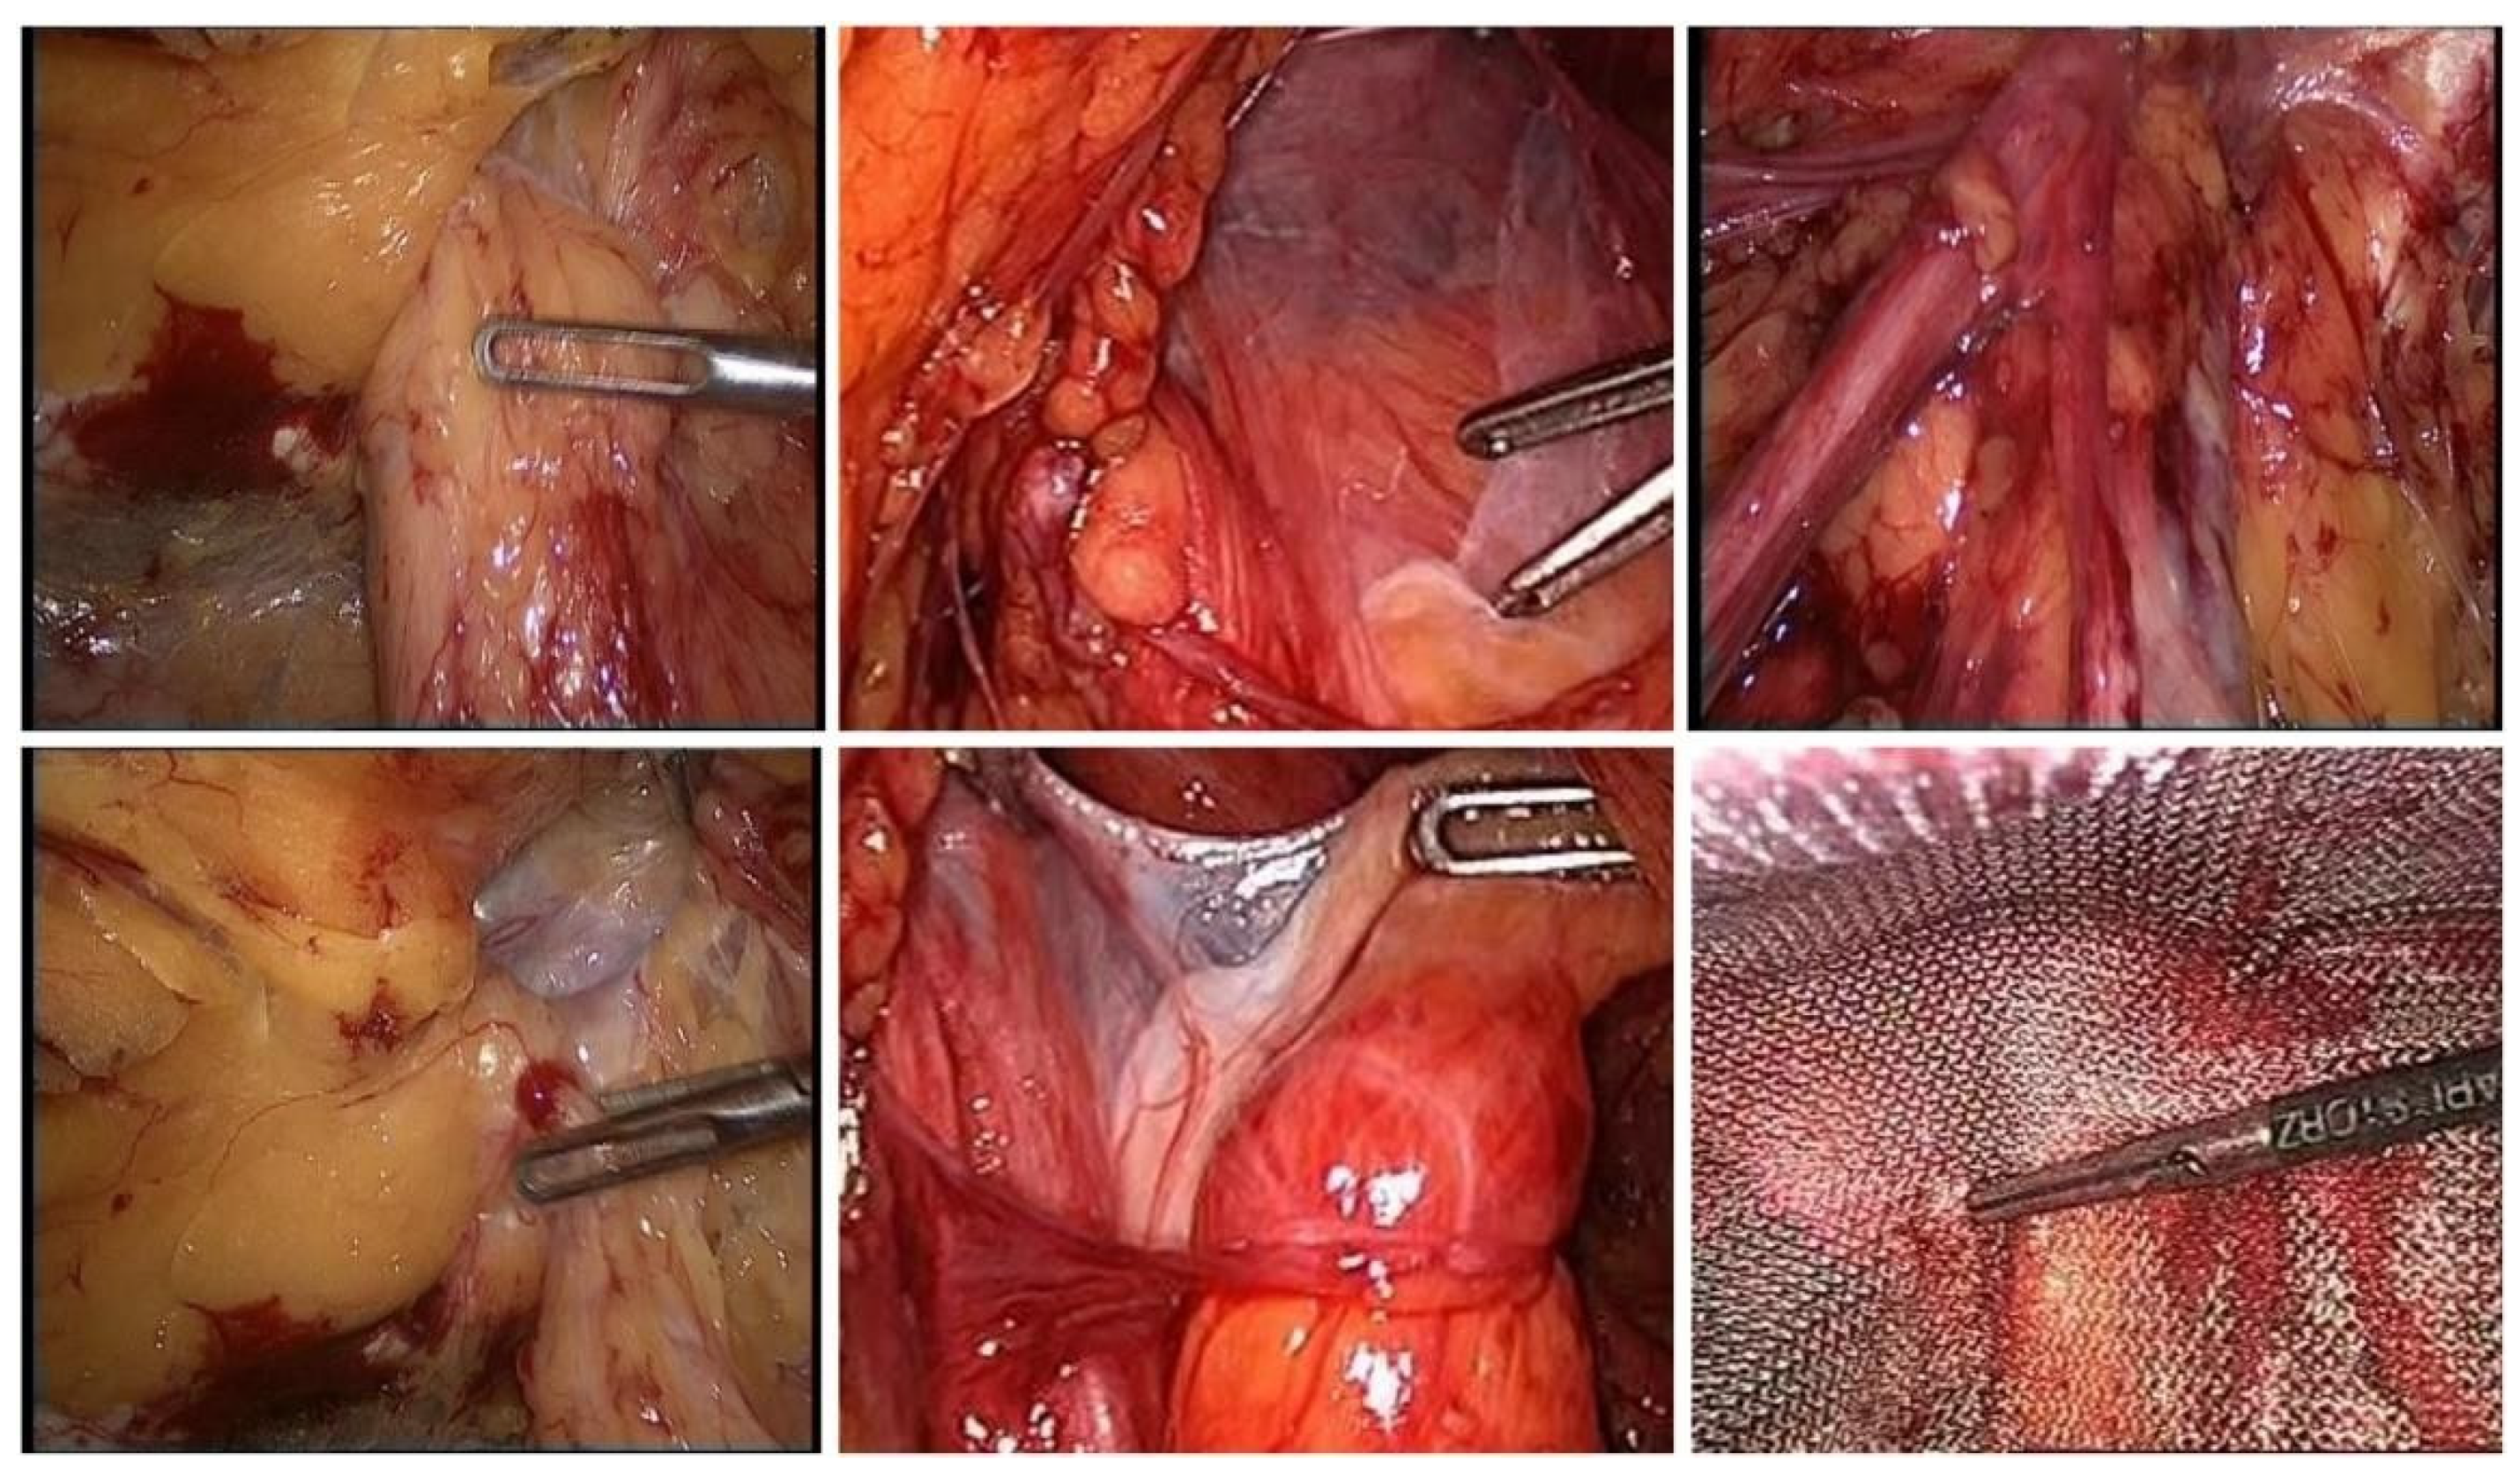 Laparoscopic repair of an incarcerated femoral hernia. - Abstract